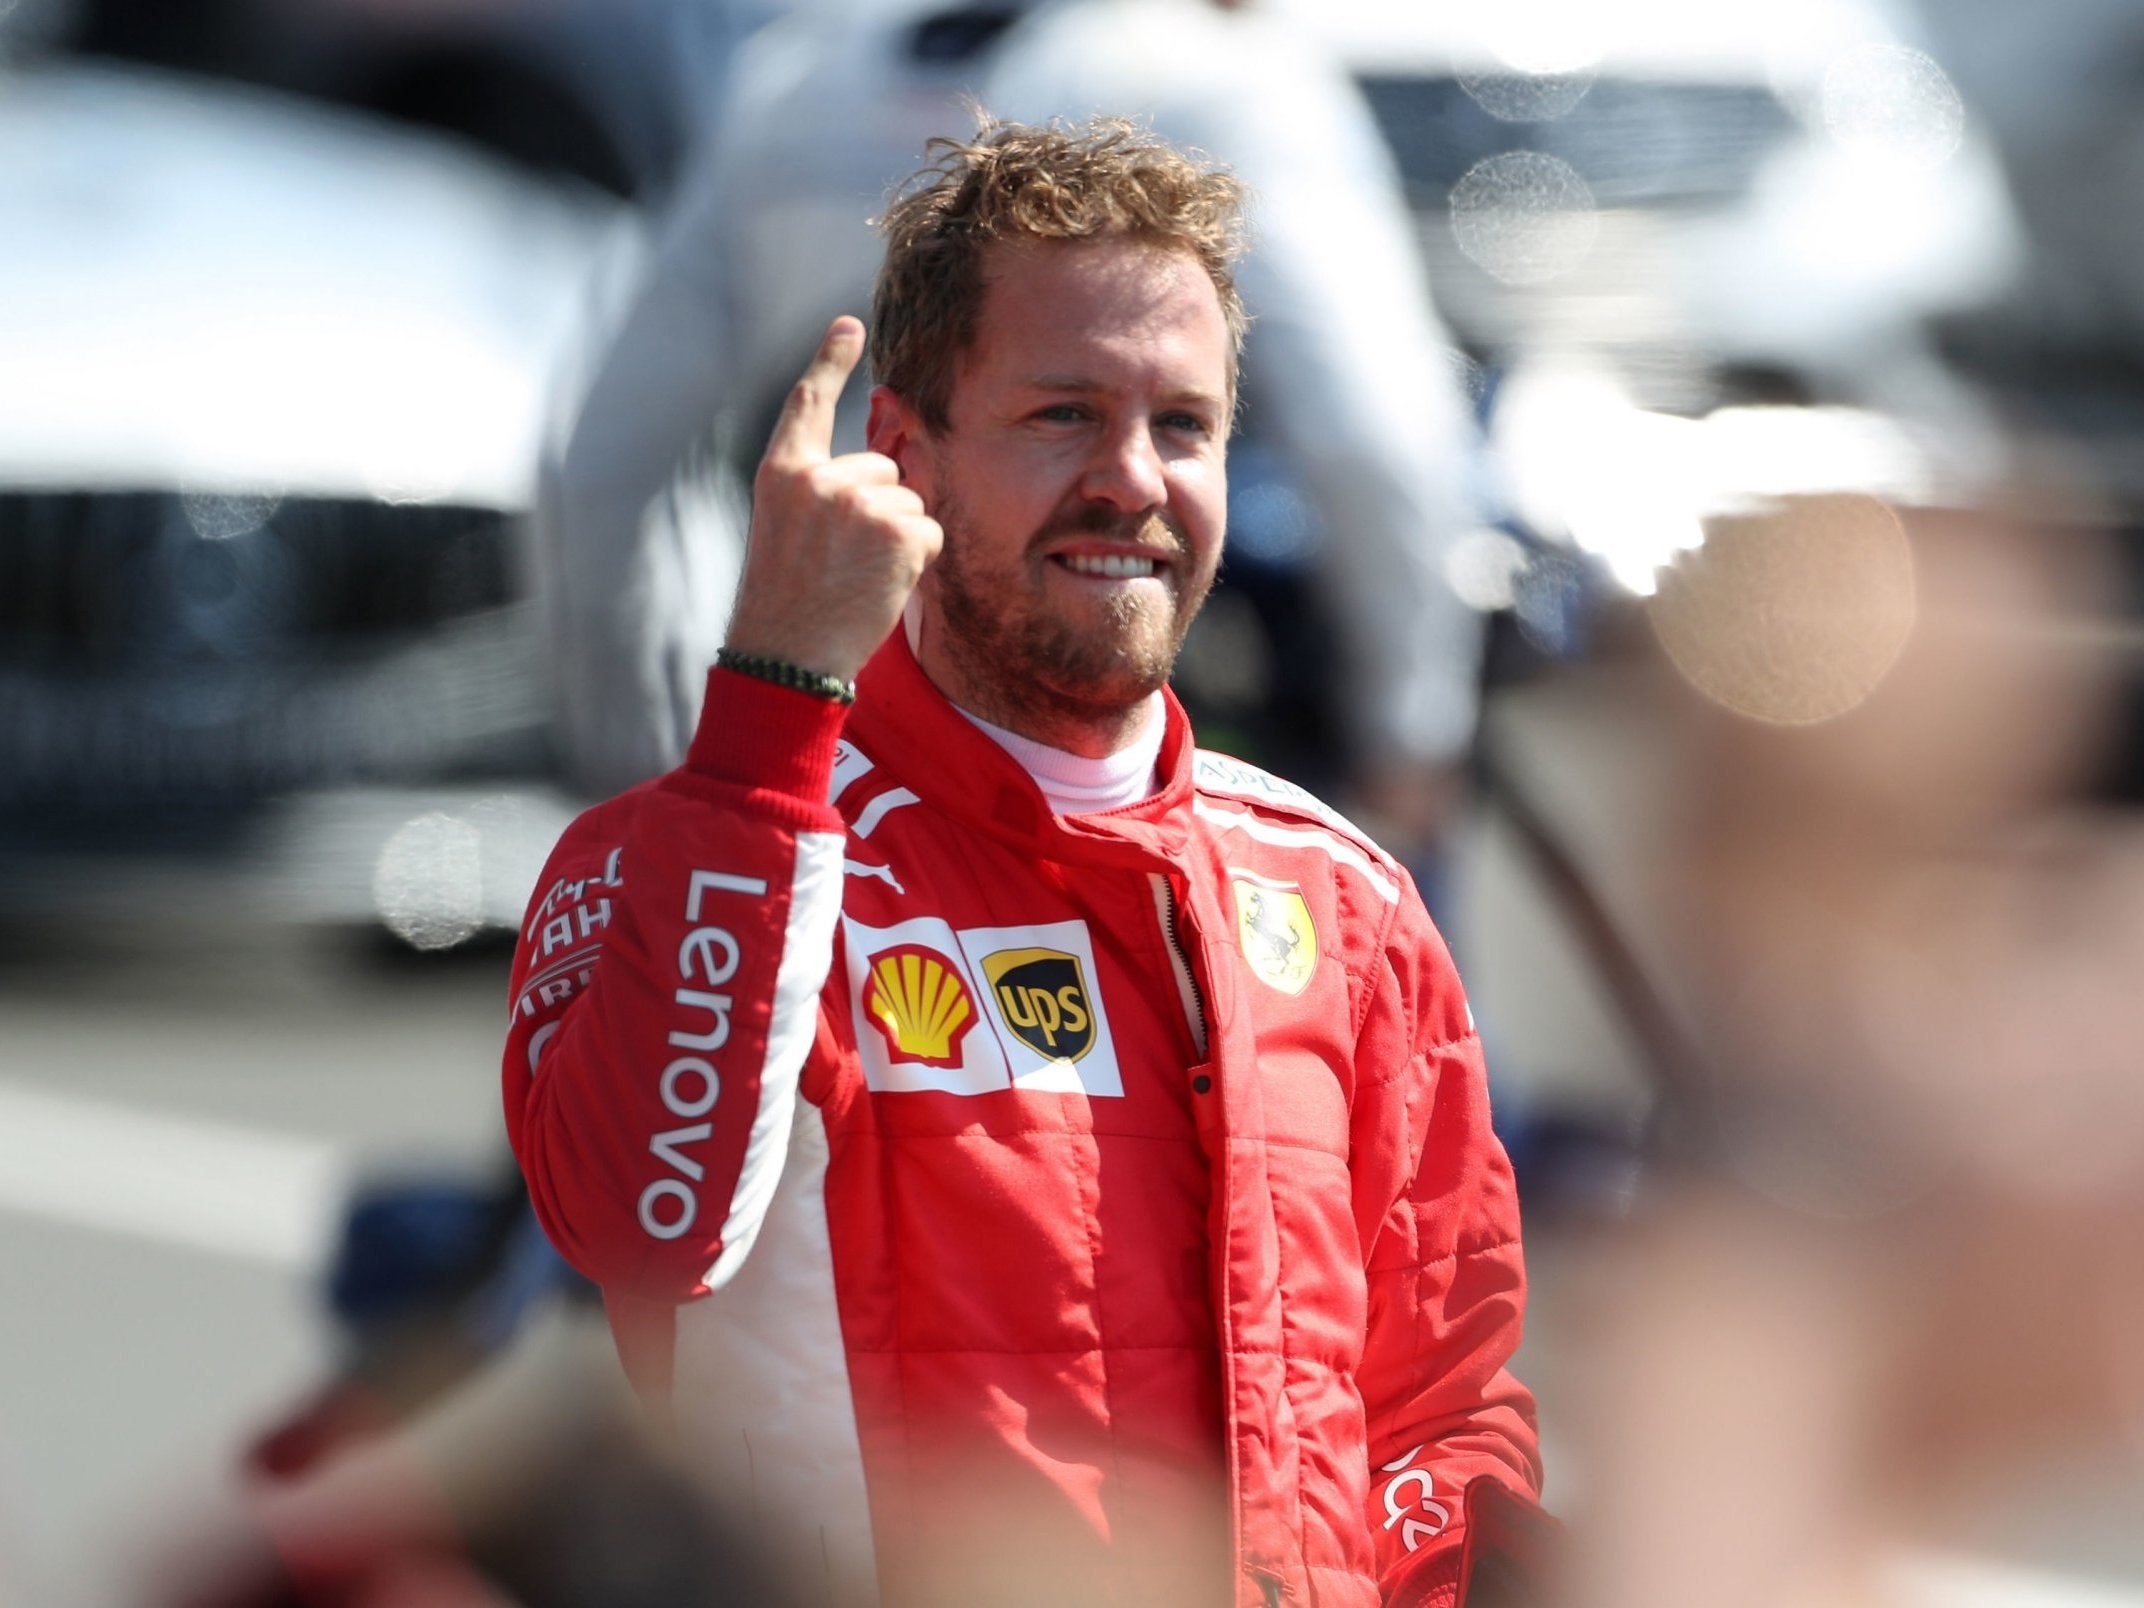 Sevbastian Vettel celebrates winning the British Grand Prix